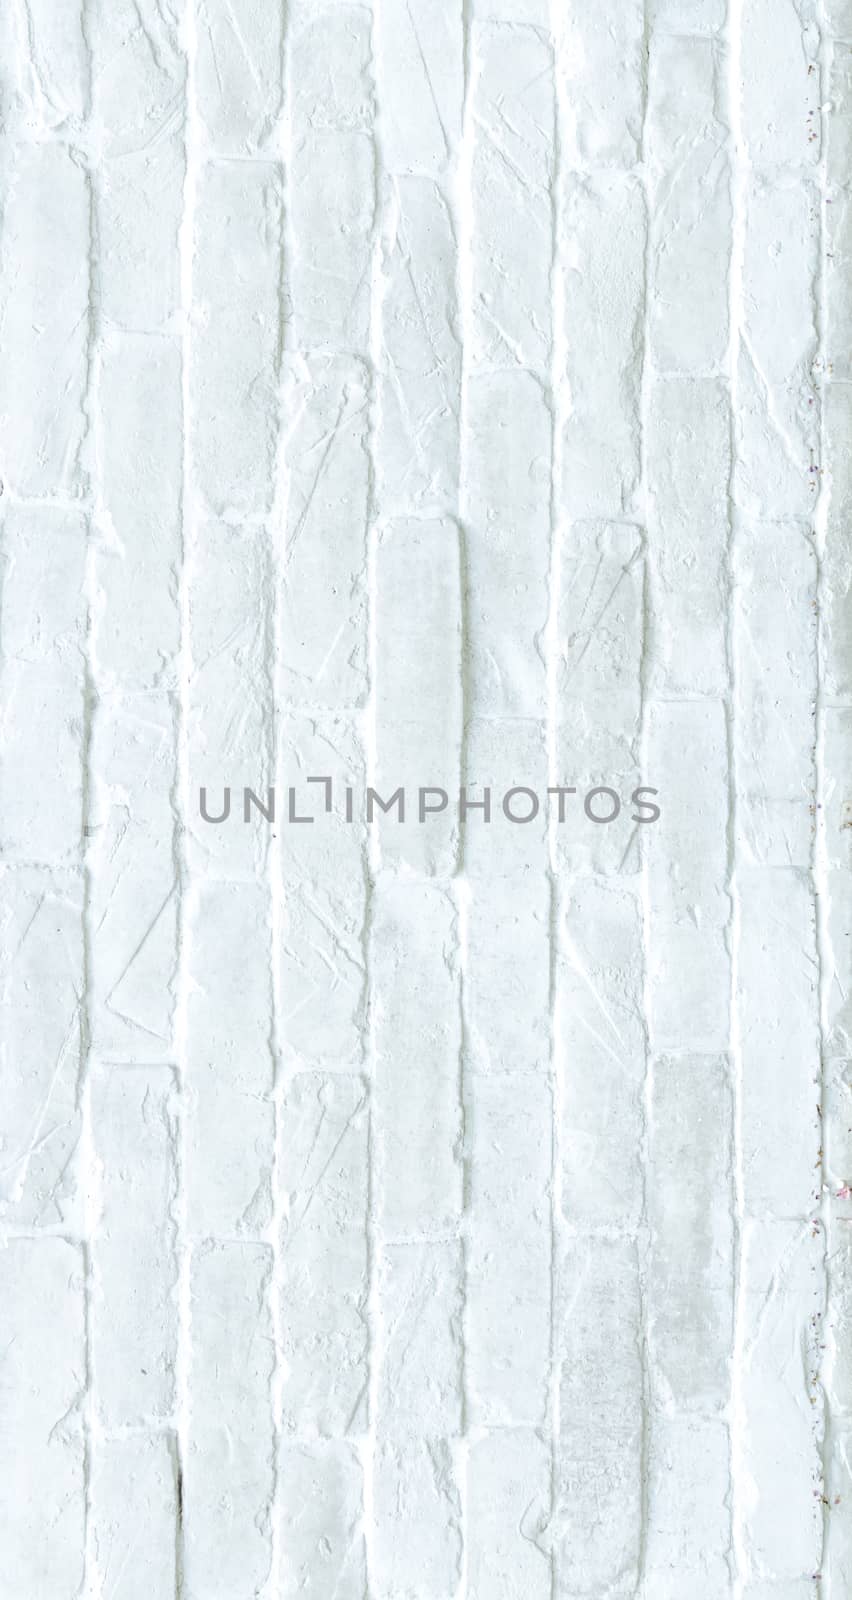 A white brick wall by nopparats